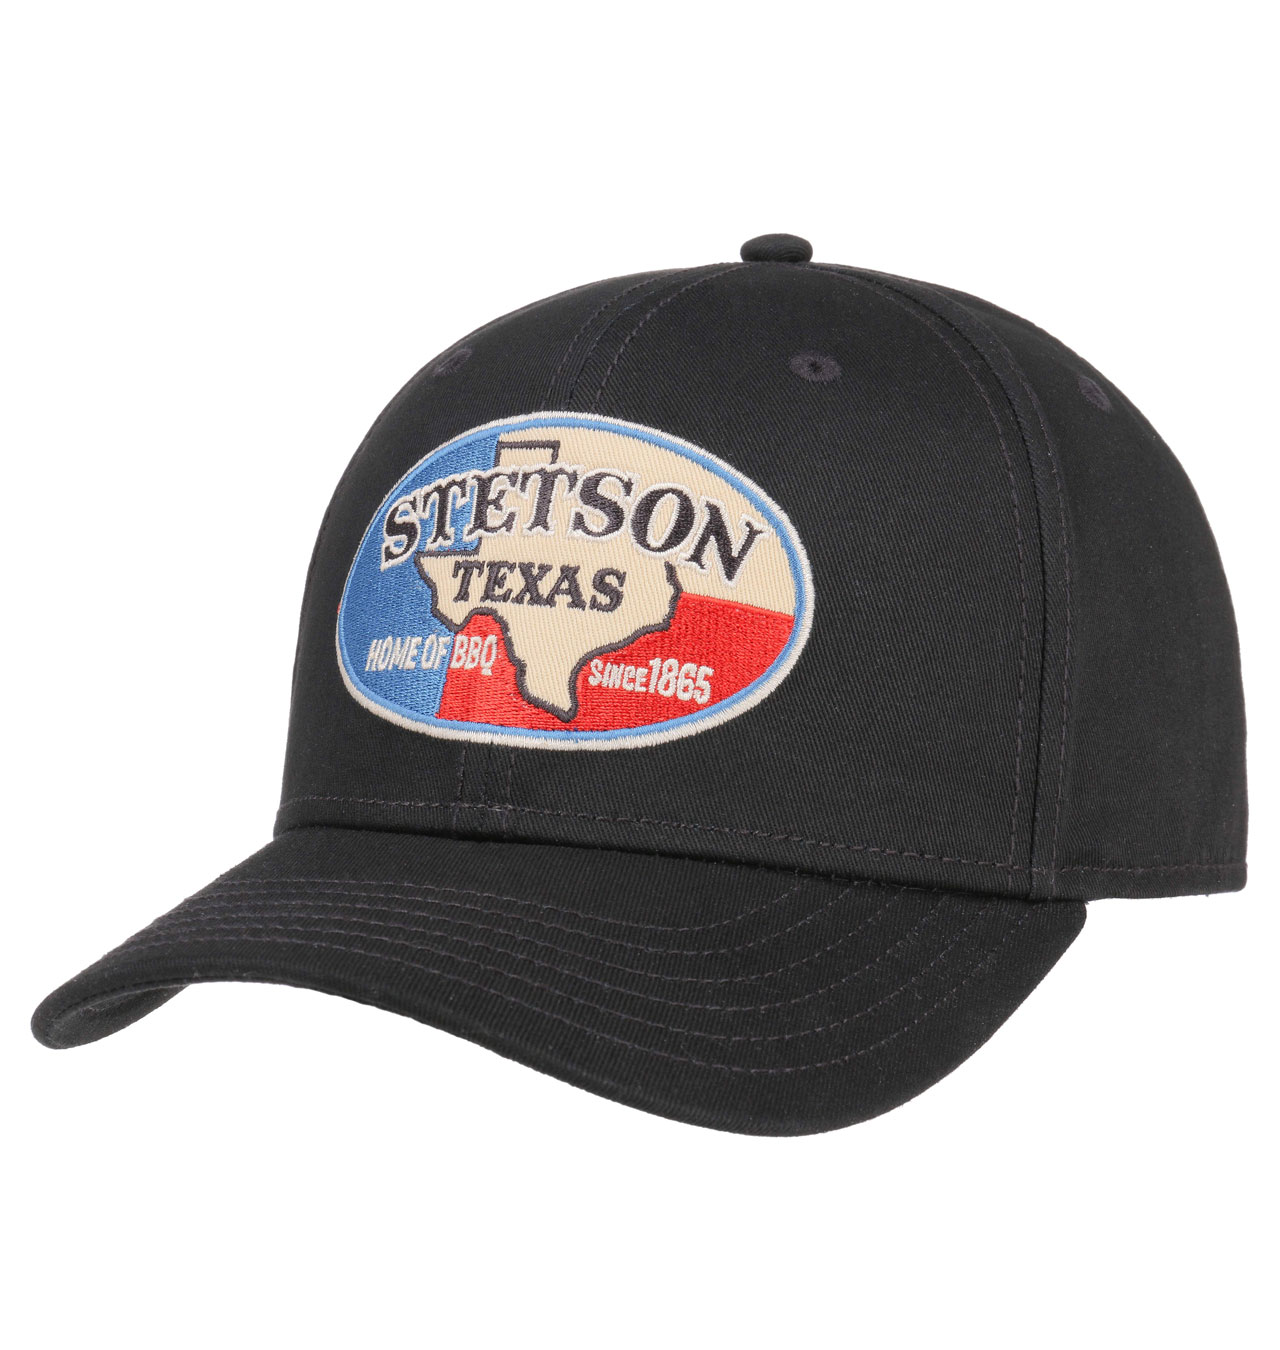 Stetson---Home-of-BBQ-Baseball-Cap---Black